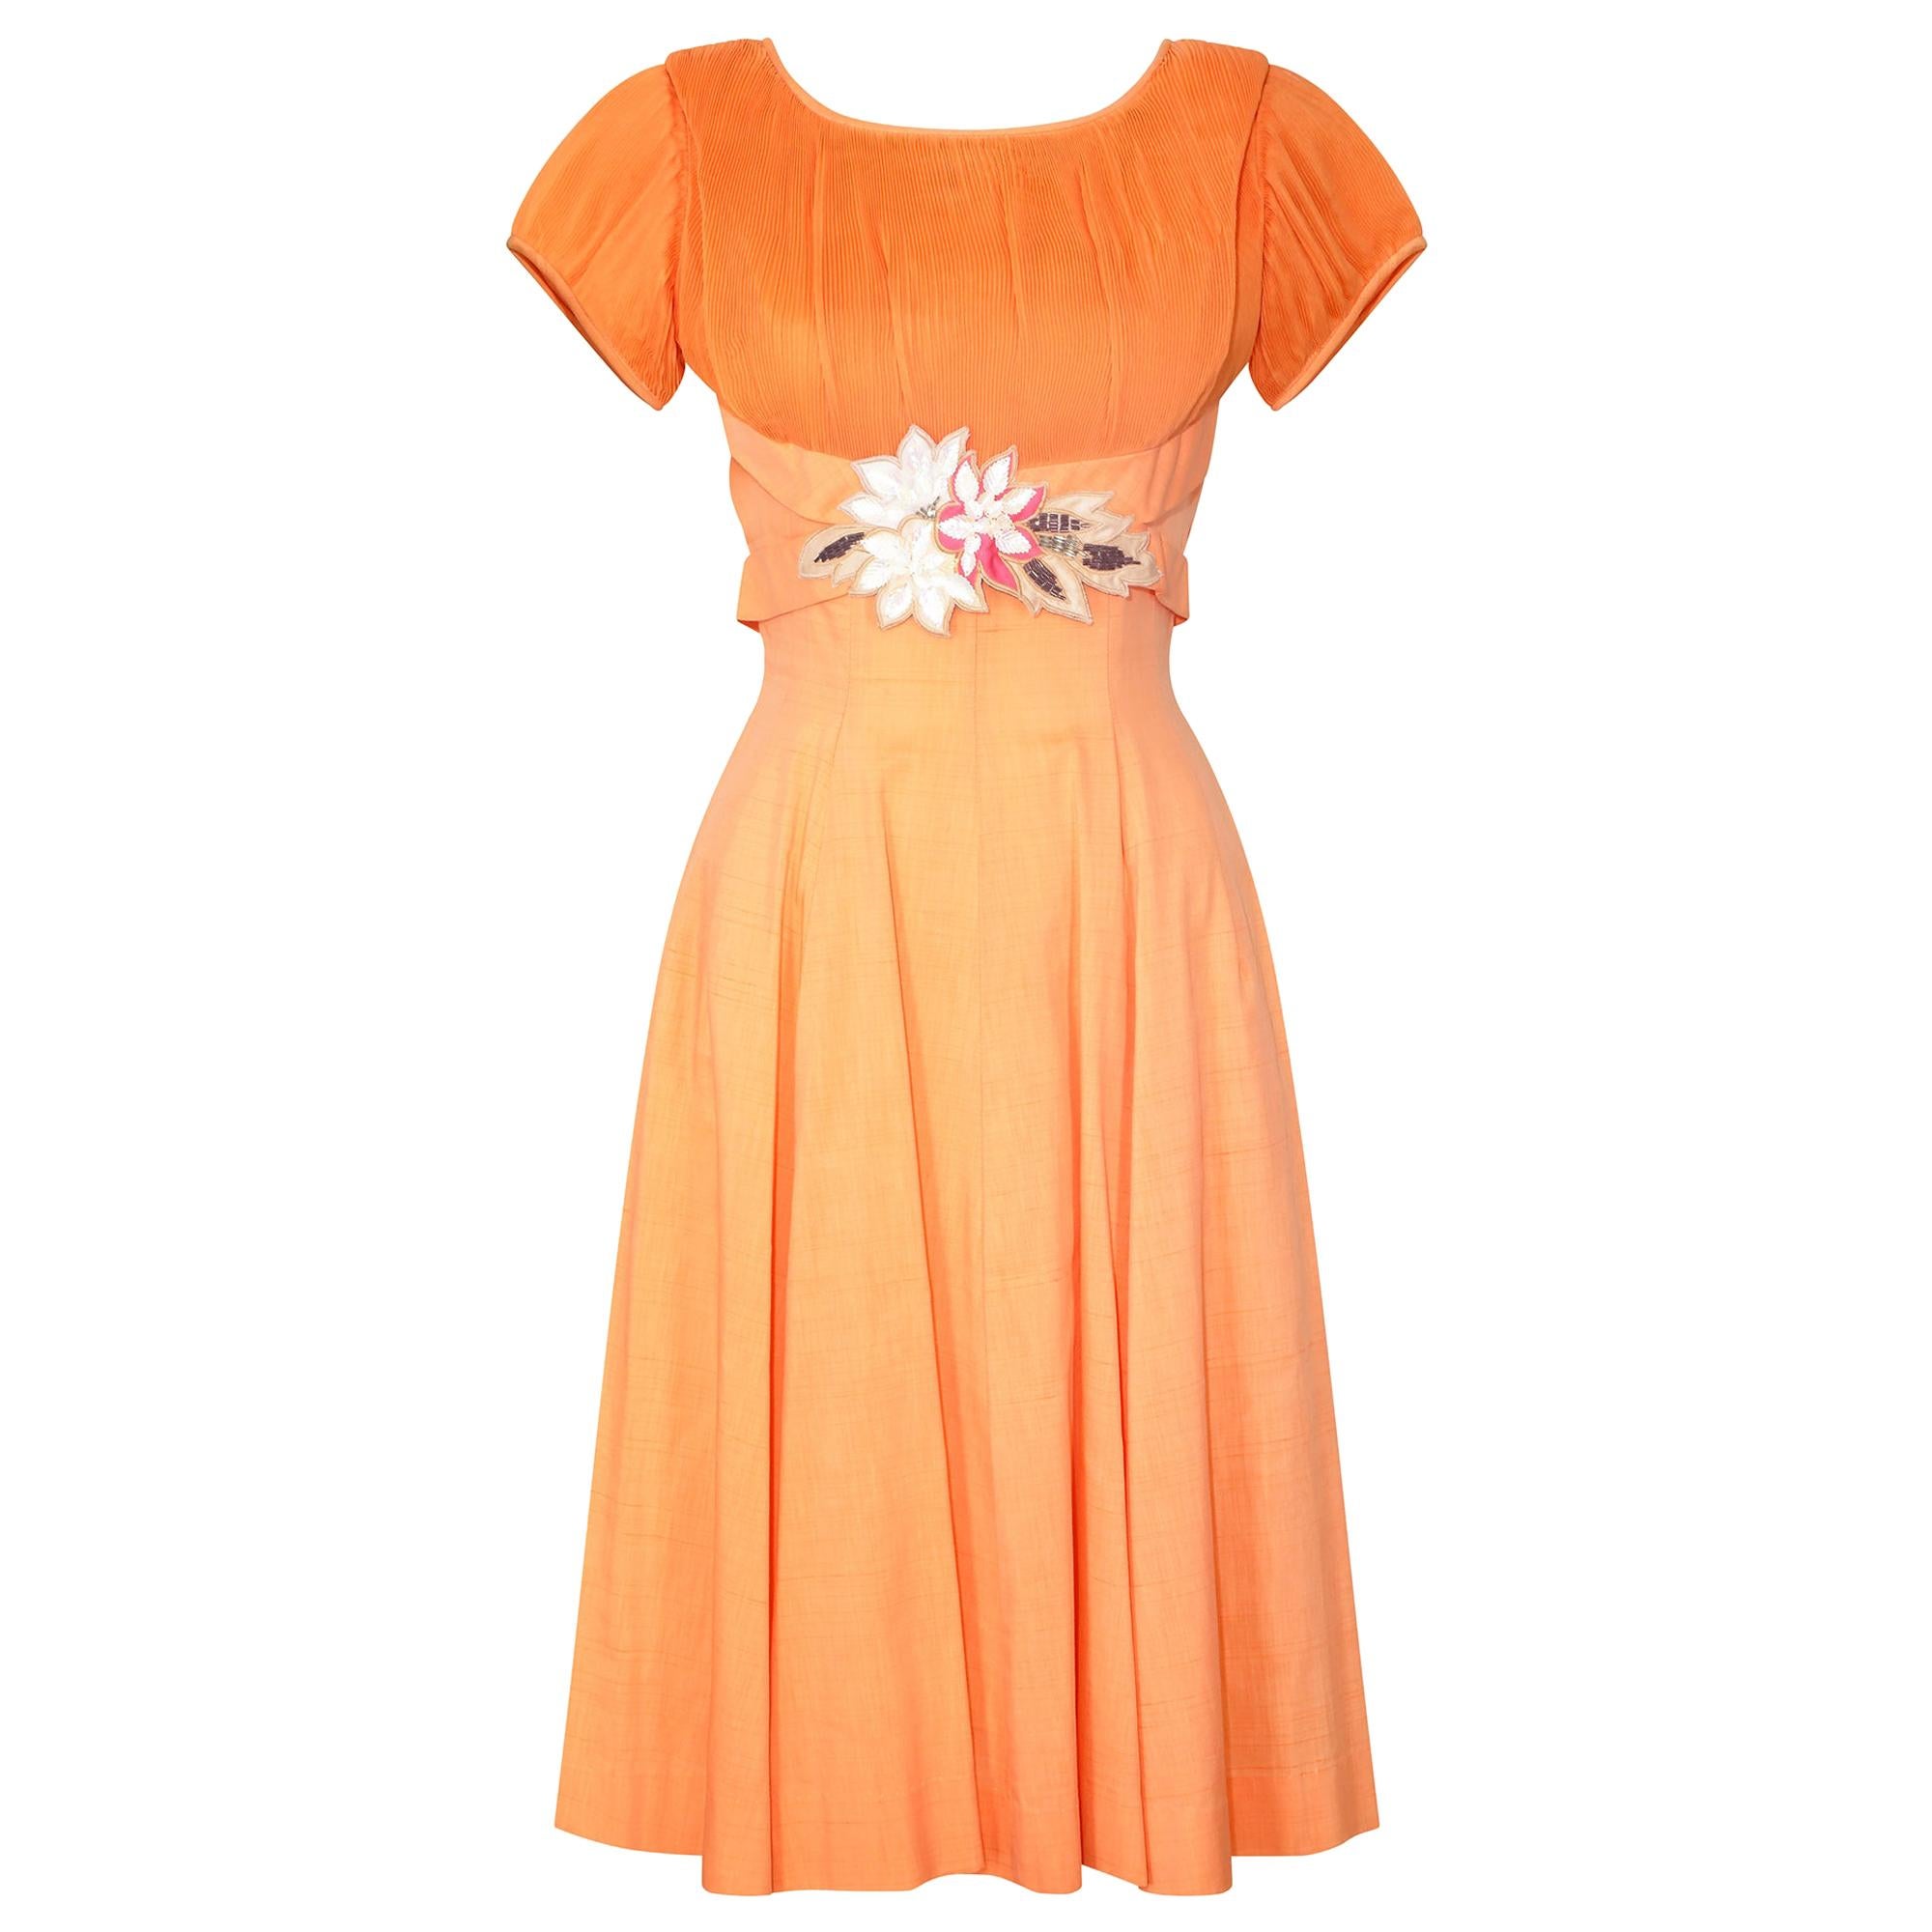 1960s Harco Orange Cotton Dress with Waistband Applique